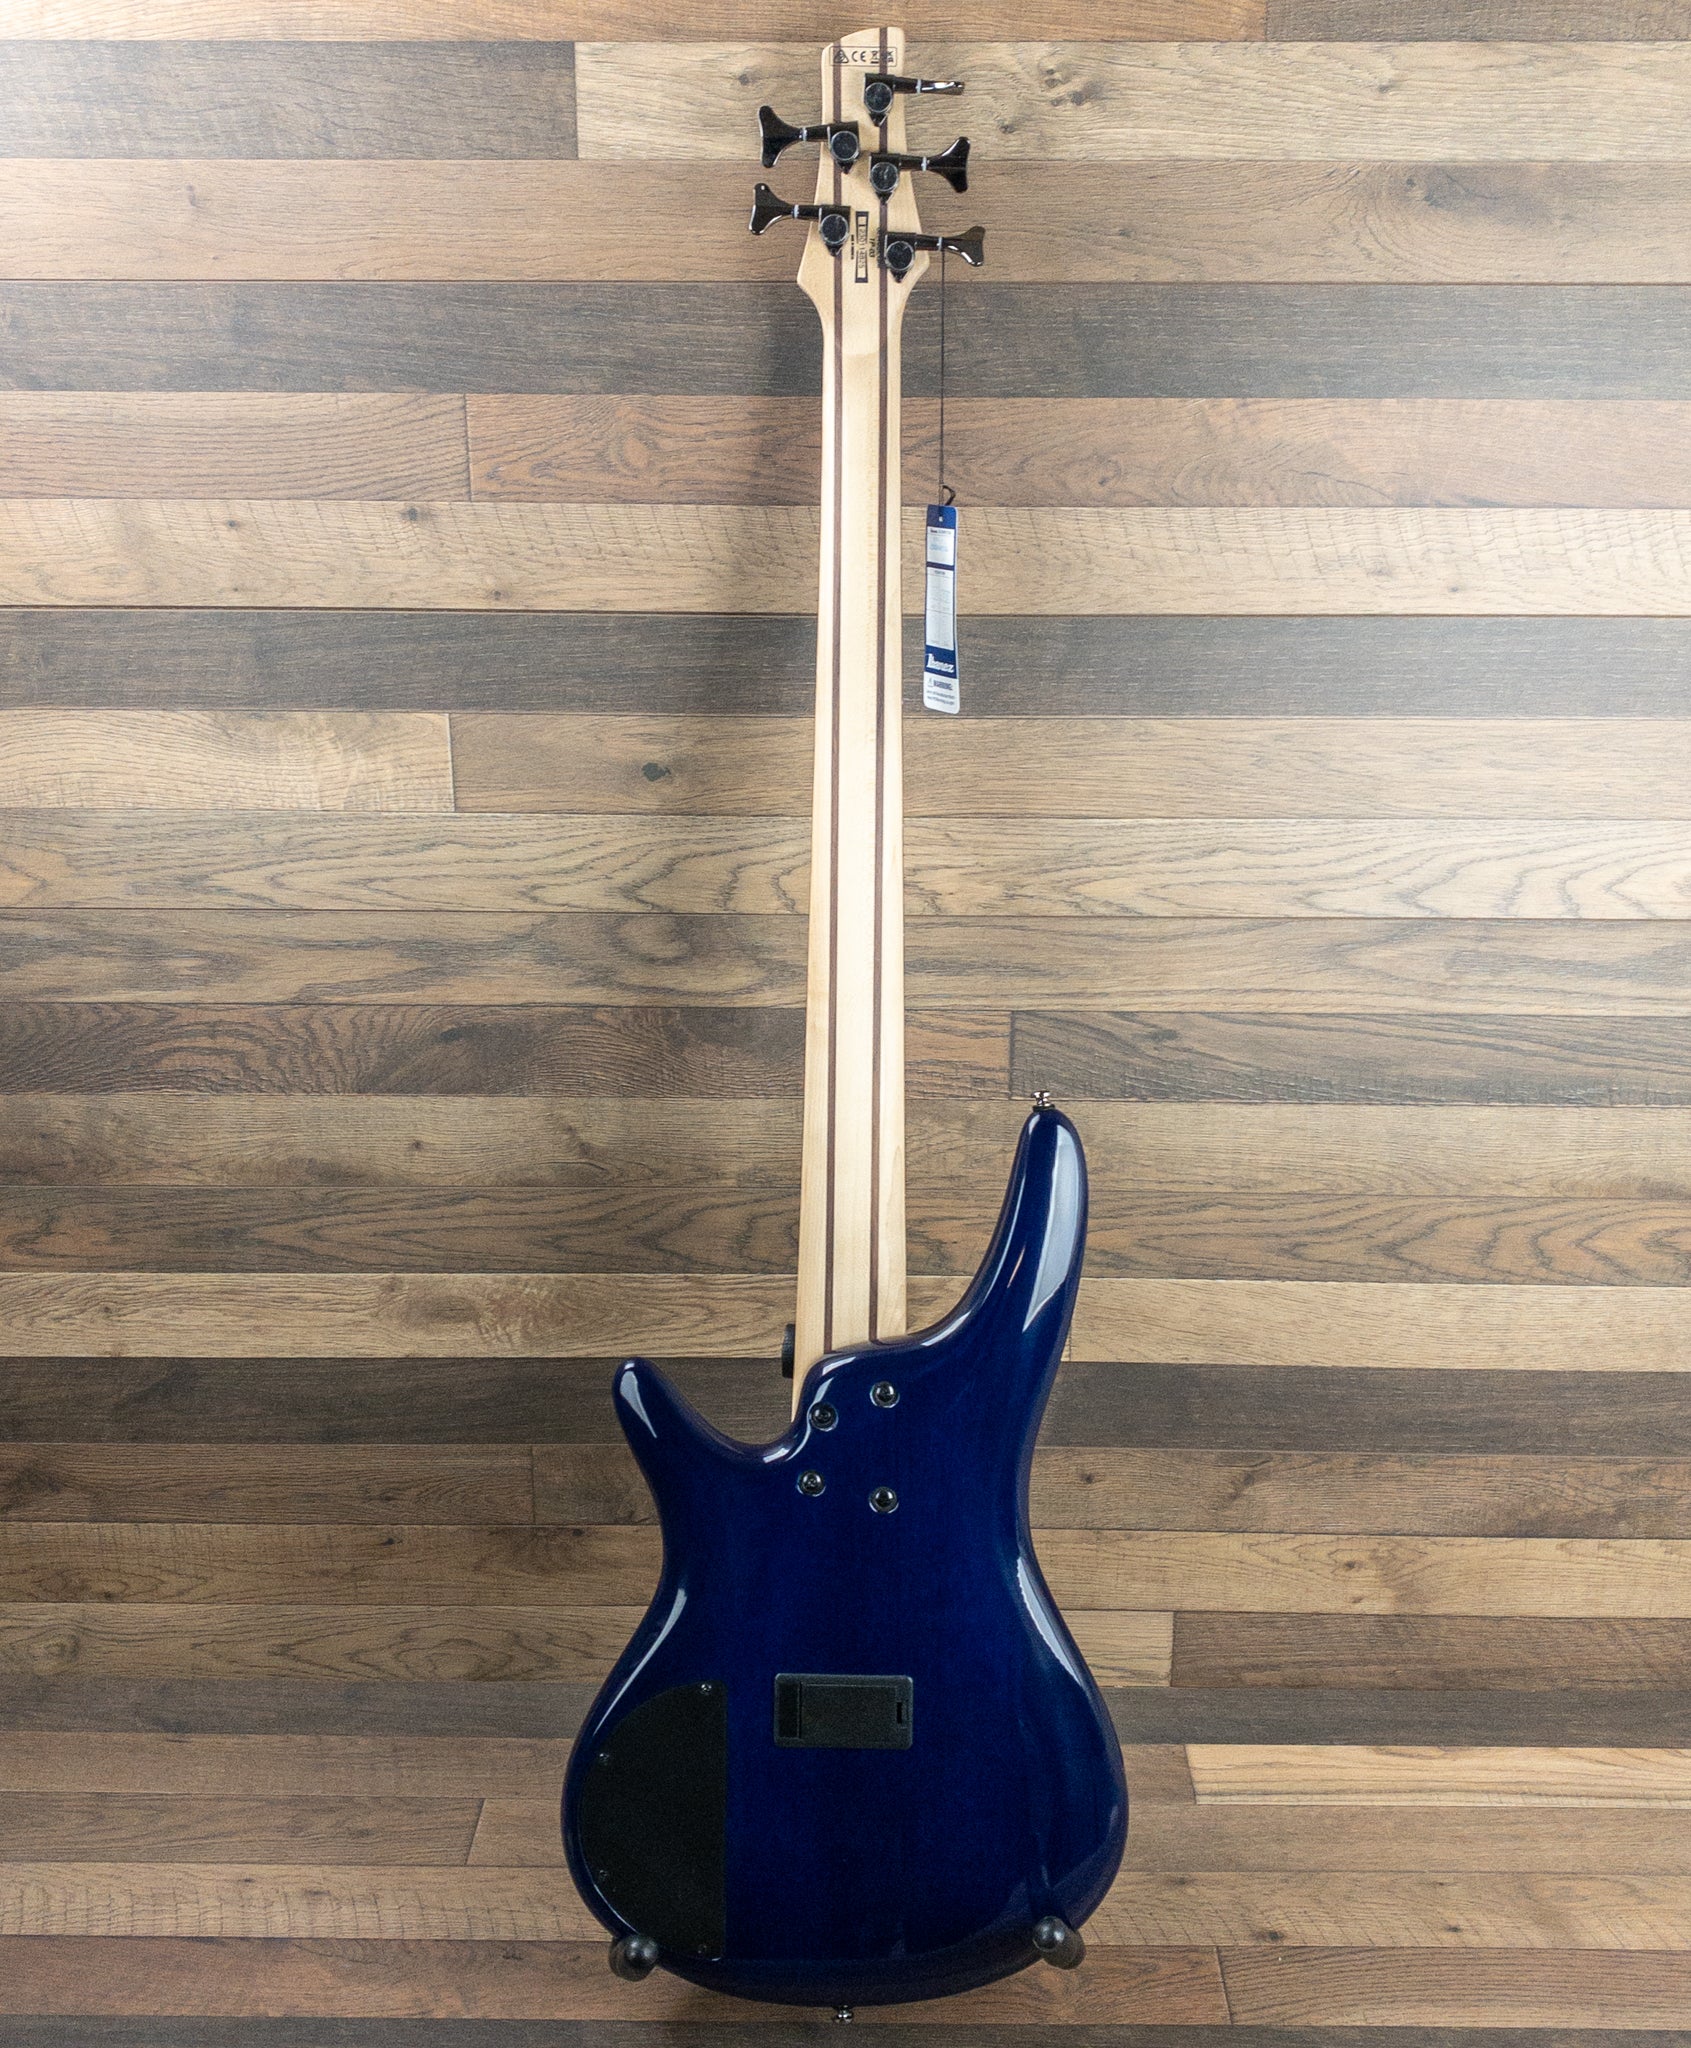 Ibanez SR405EQM-SLG Right-Handed 5-String Bass Guitar Surreal Blue Burst Gloss